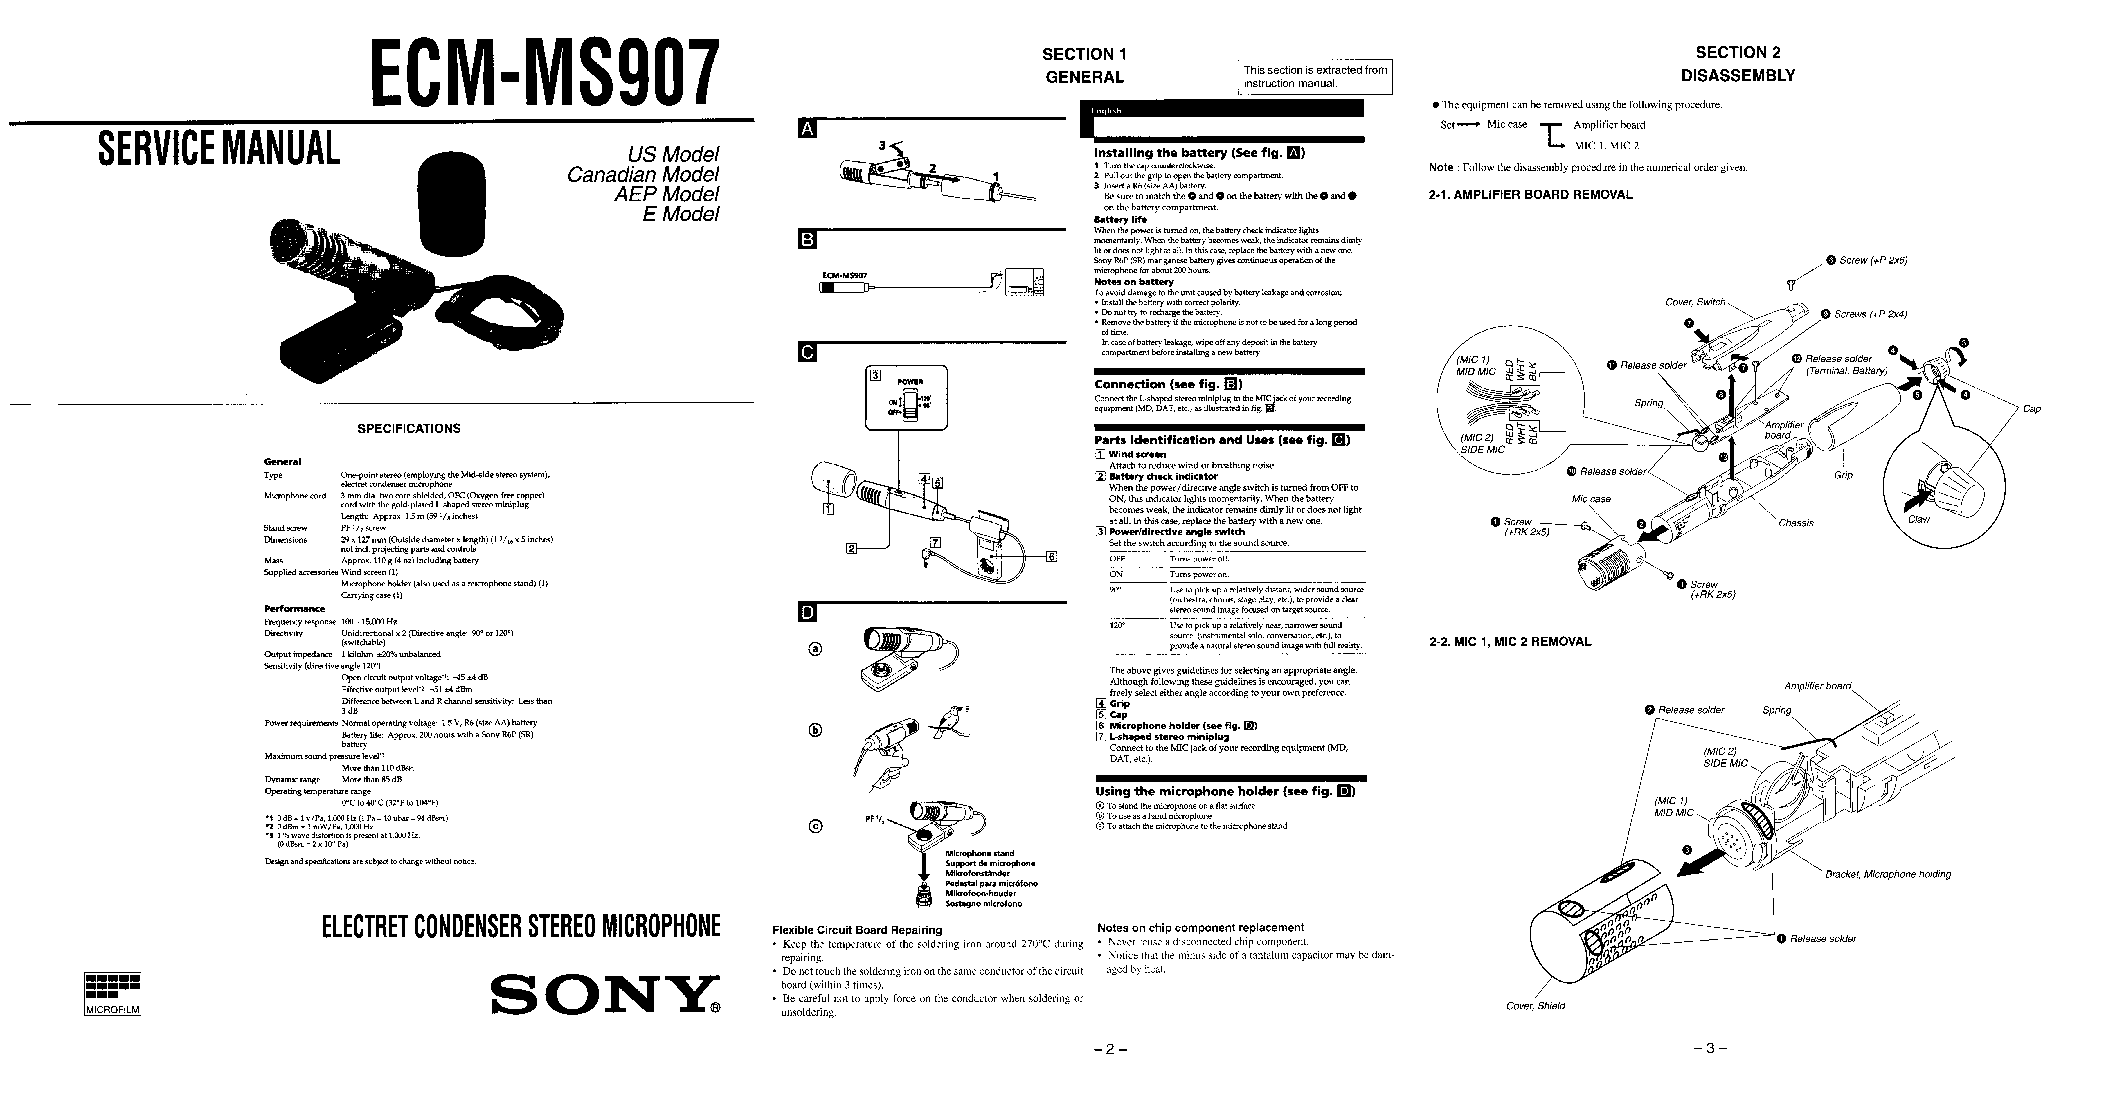 SONY ECM-MS907 SM service manual (1st page)